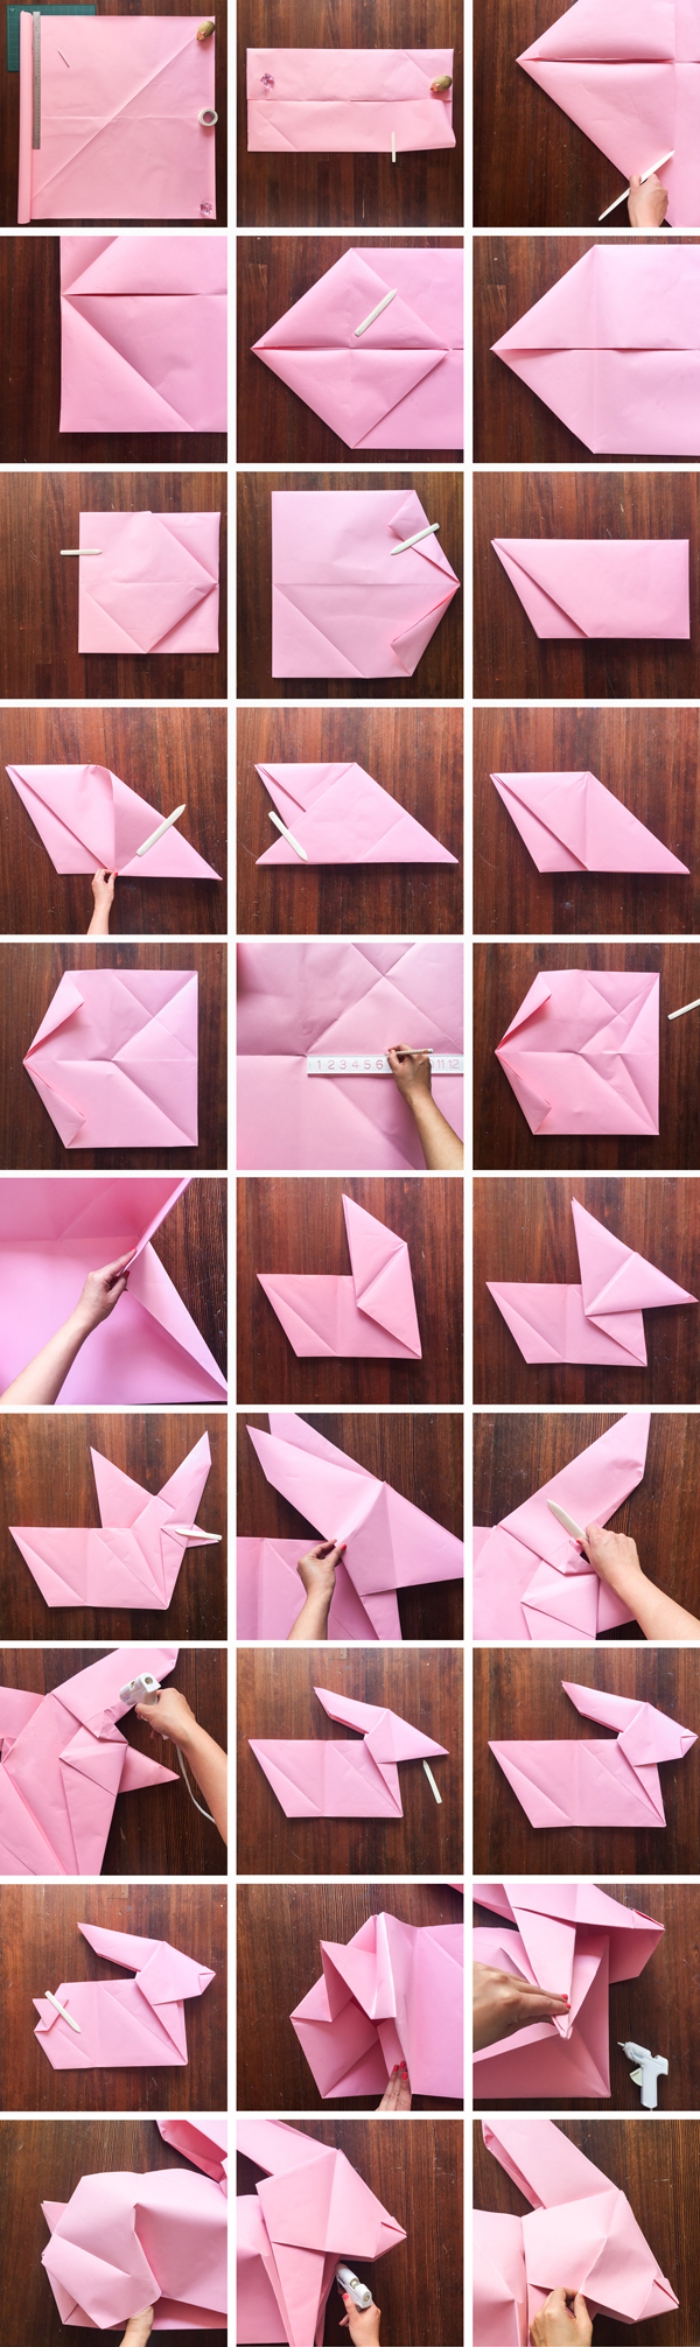 origami osterhase aus rosa papier falten, hase basteln aus papier, anleitung